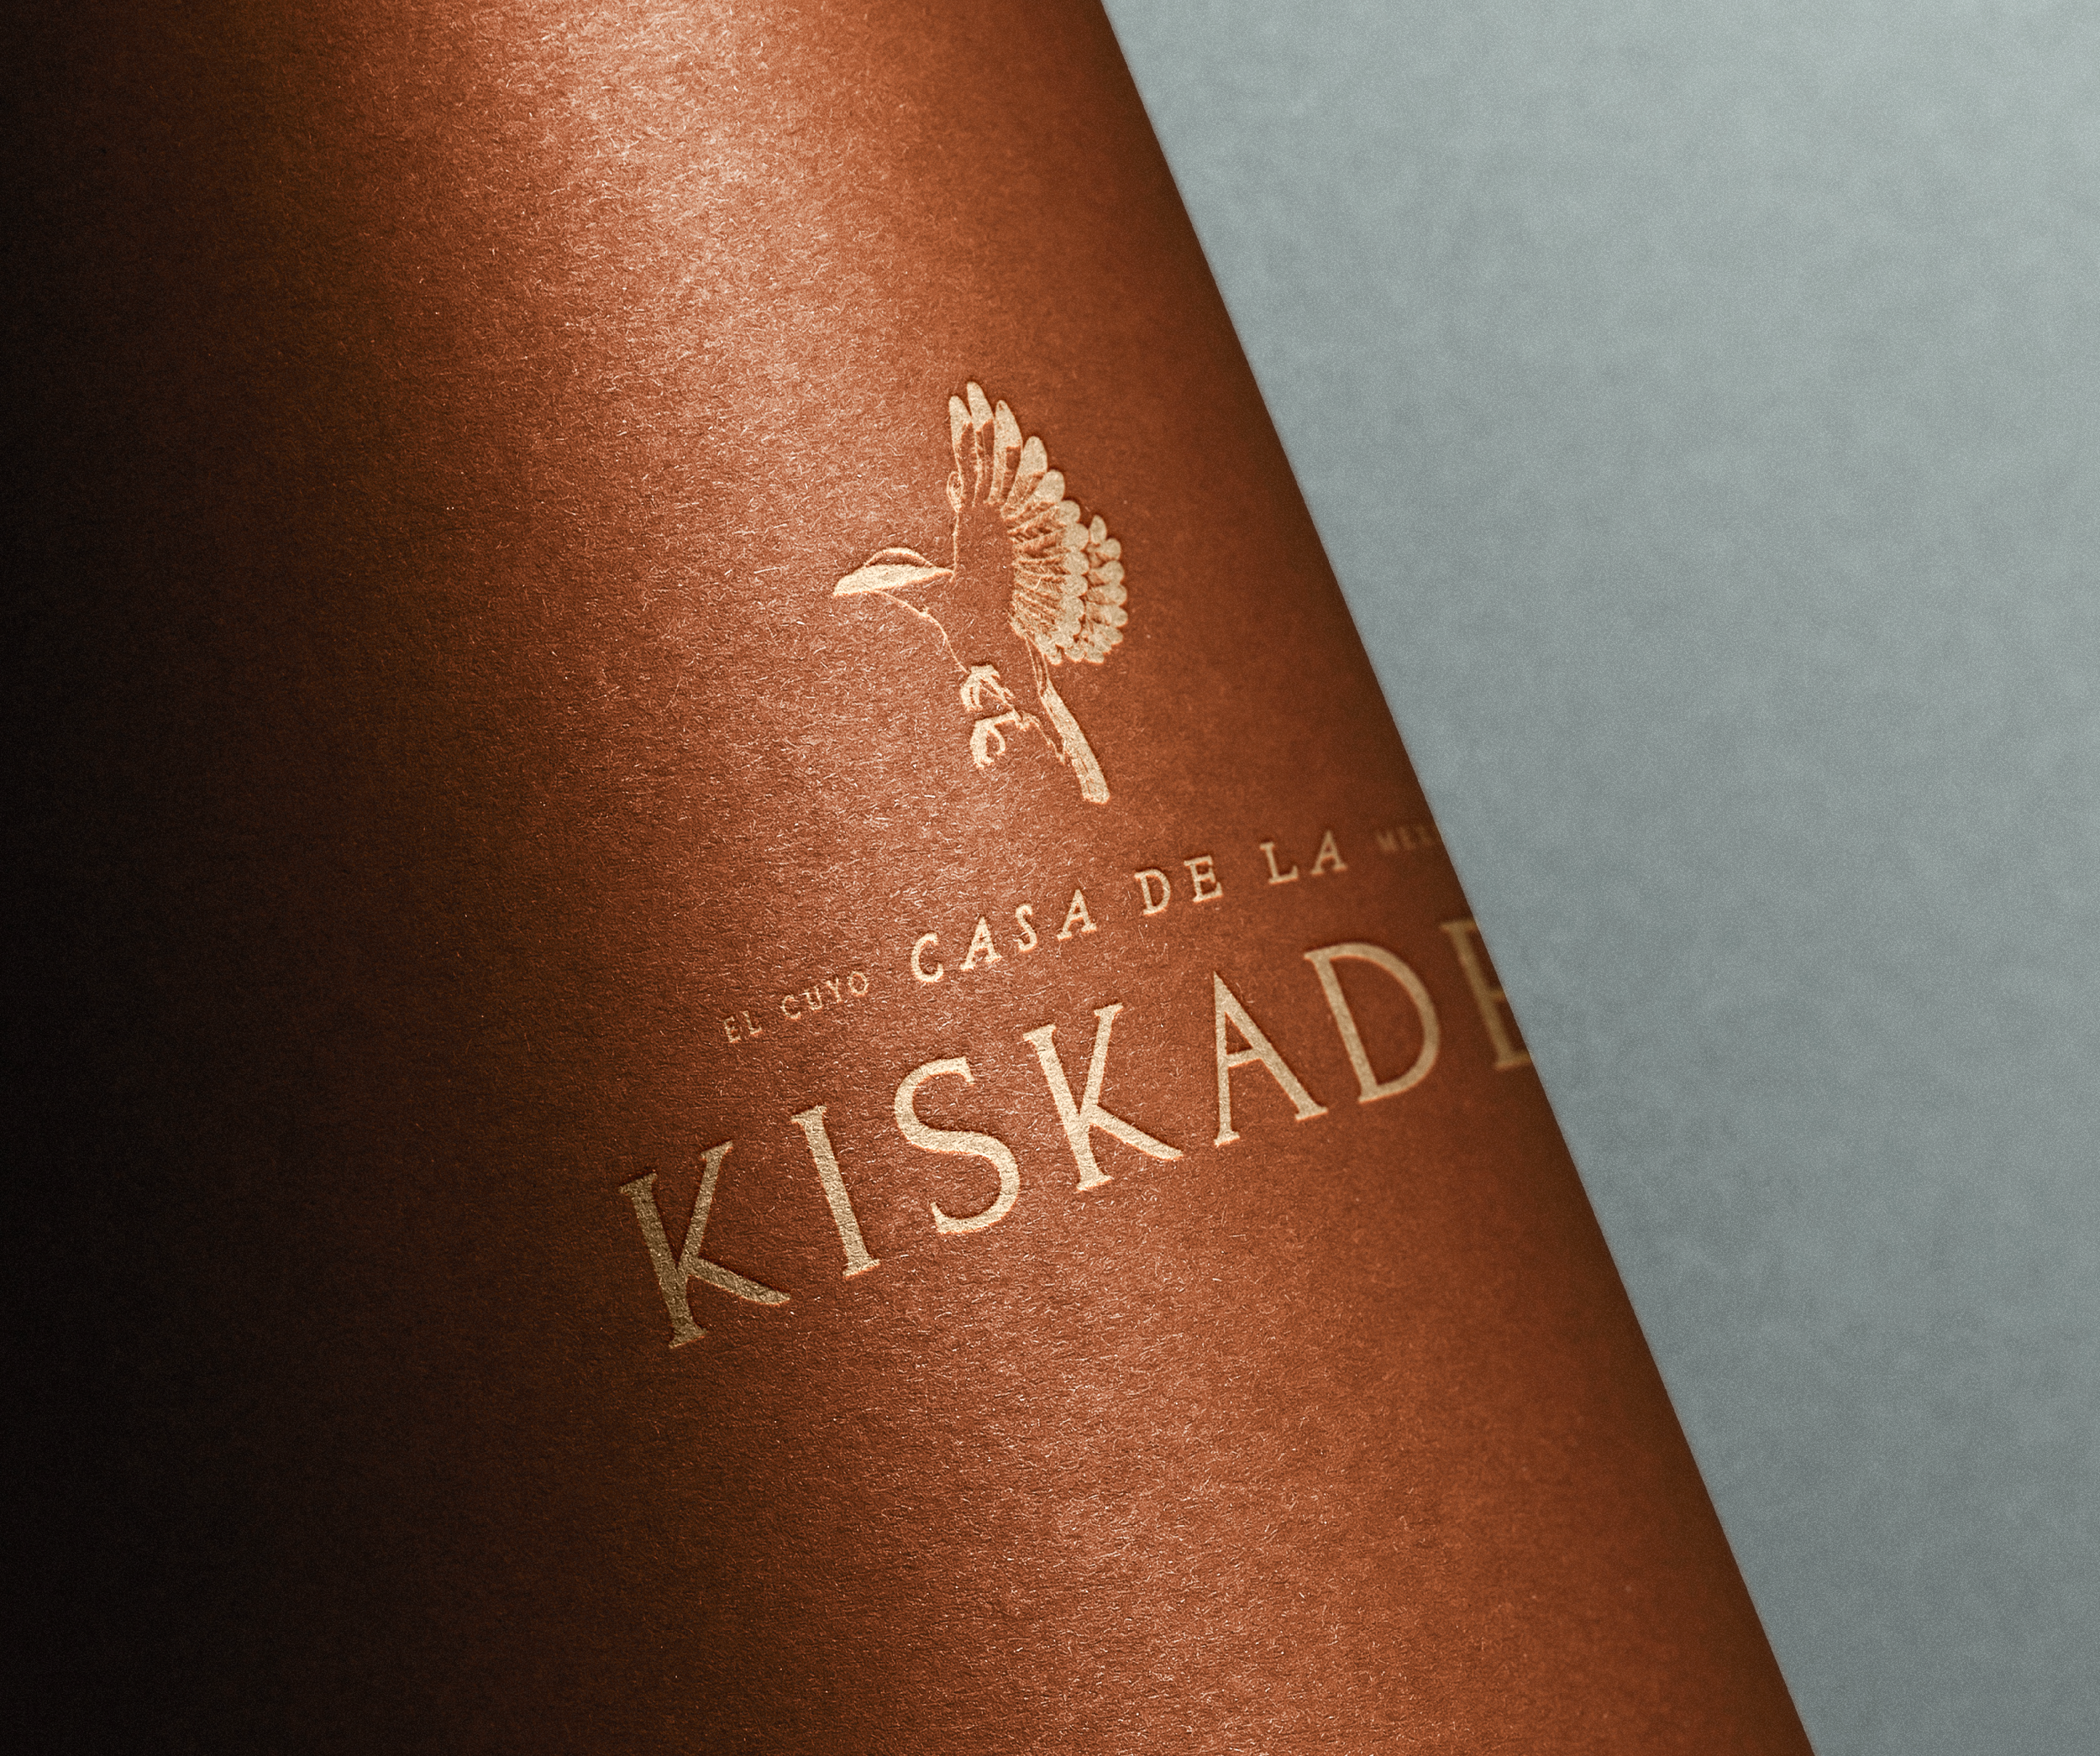 SK_Kiskadee-PortfolioAssets.png